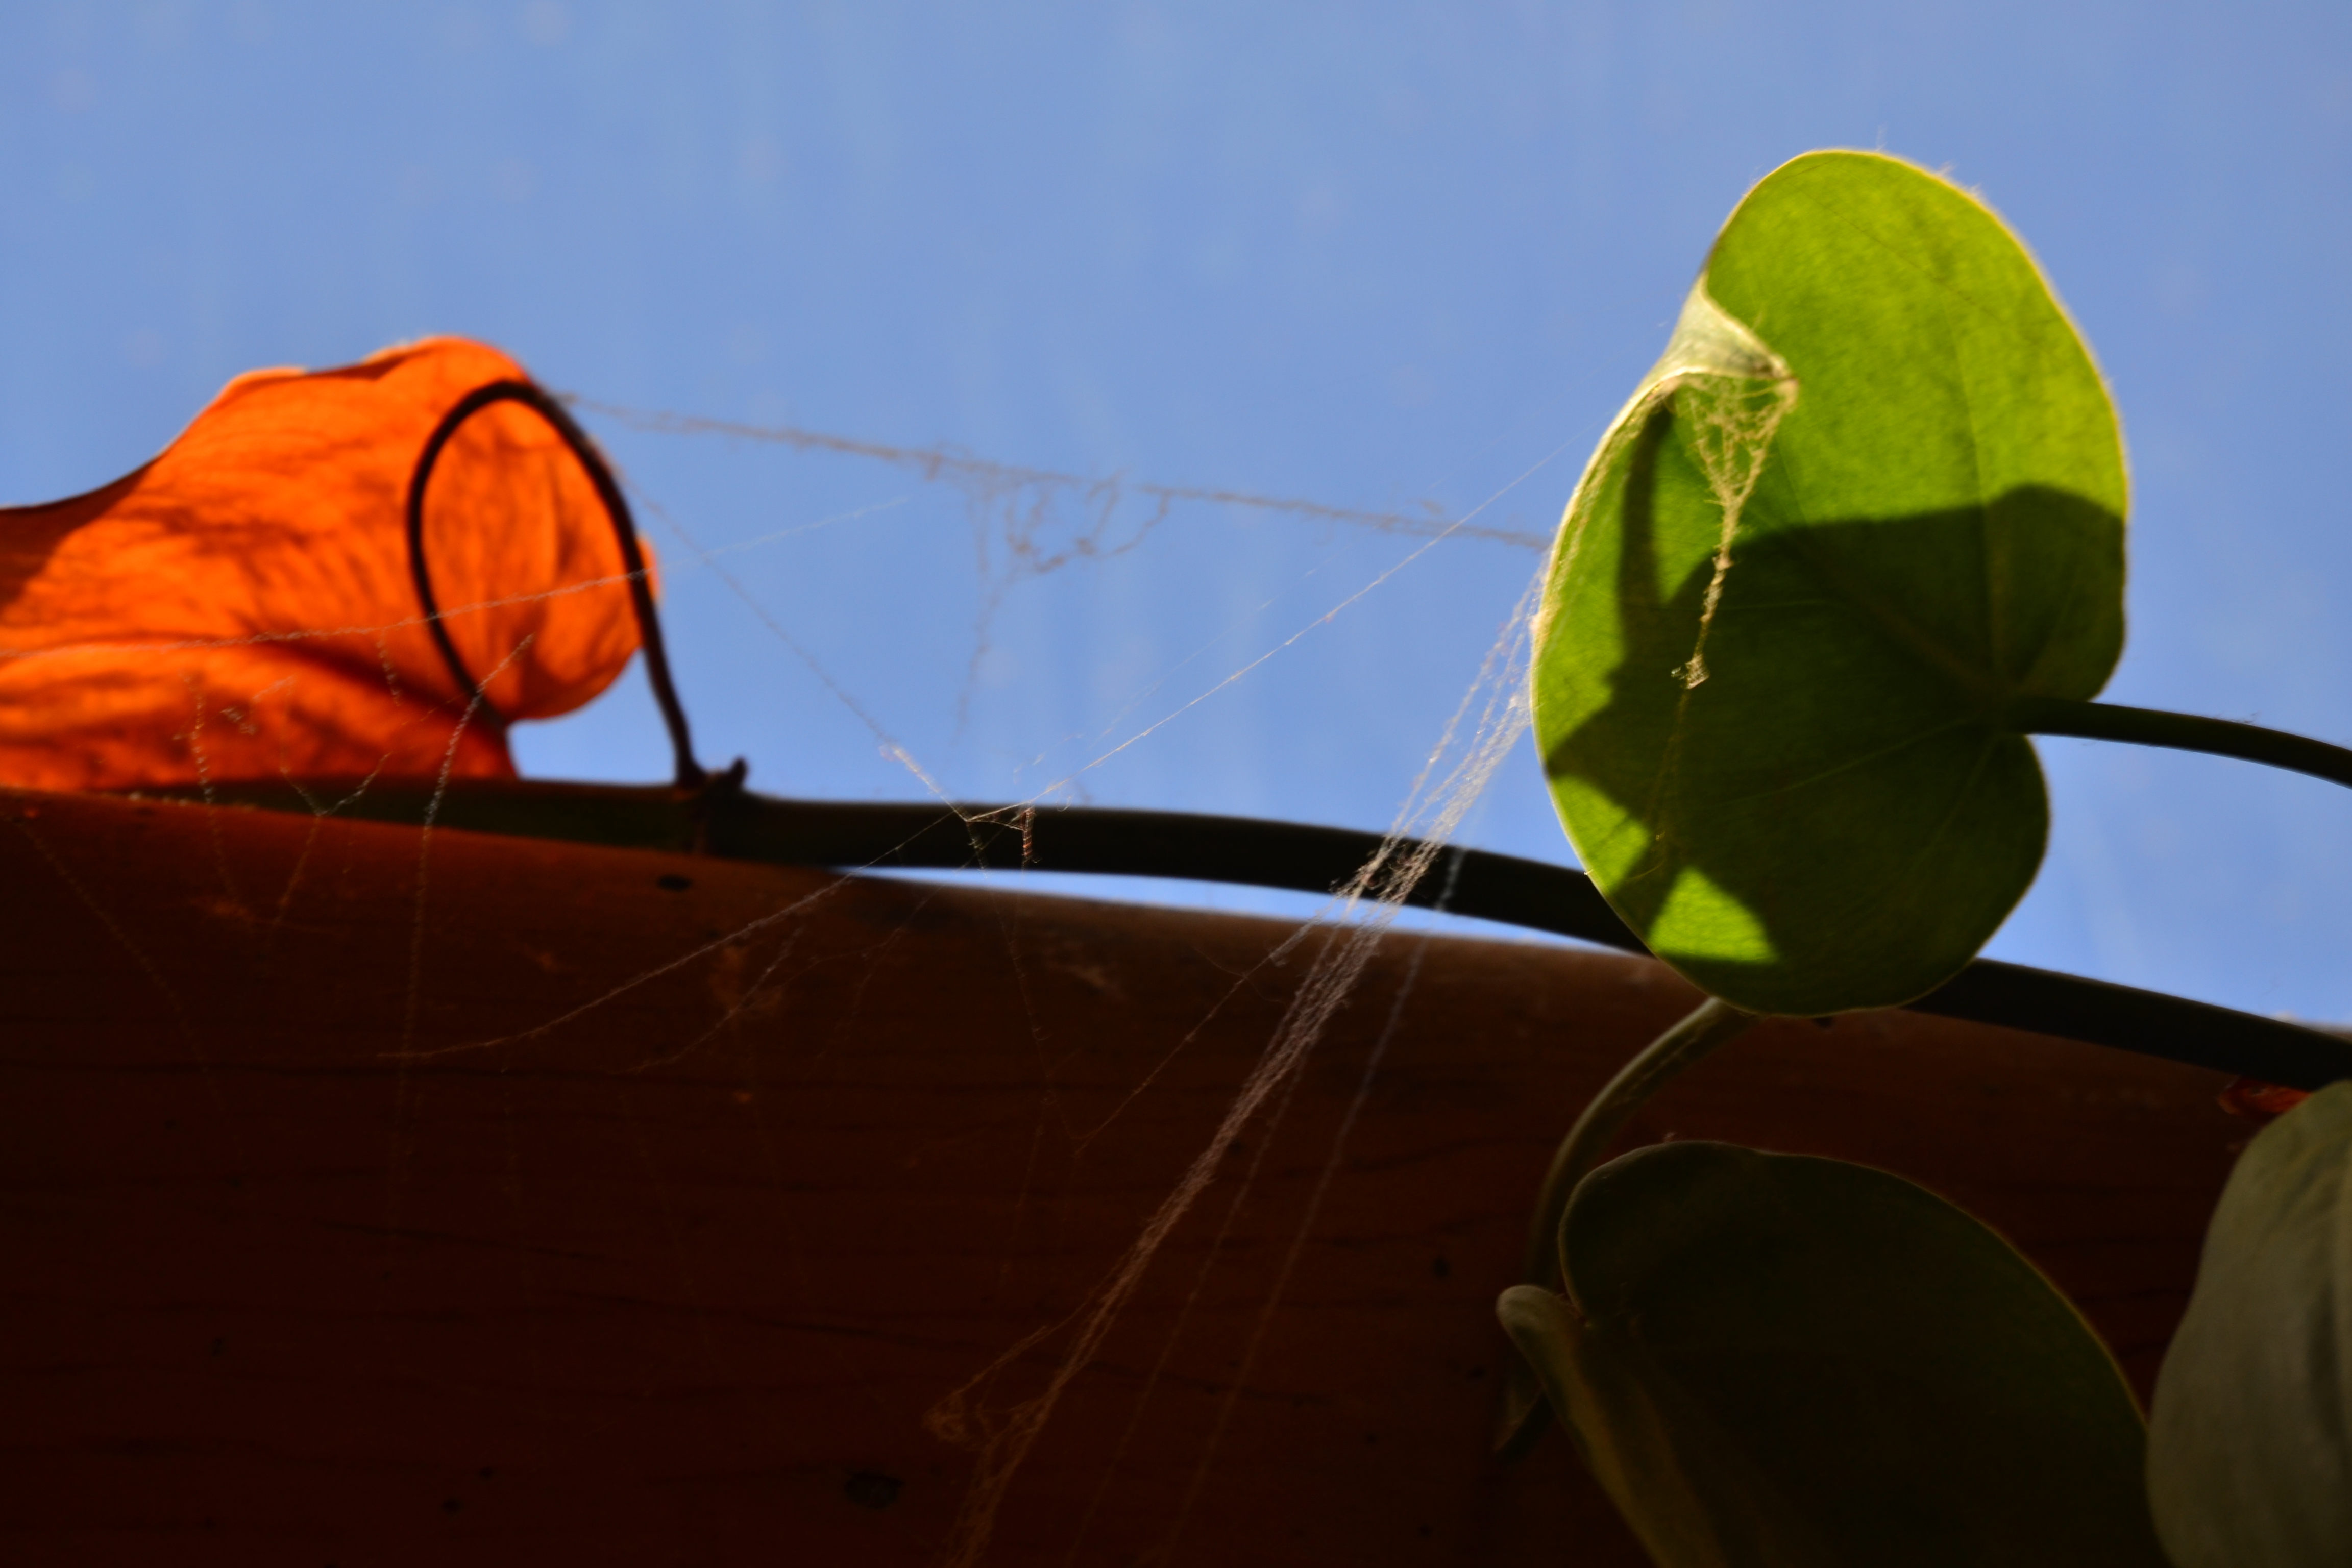 Harmless spider's web on bright leaves - marketing metaphor